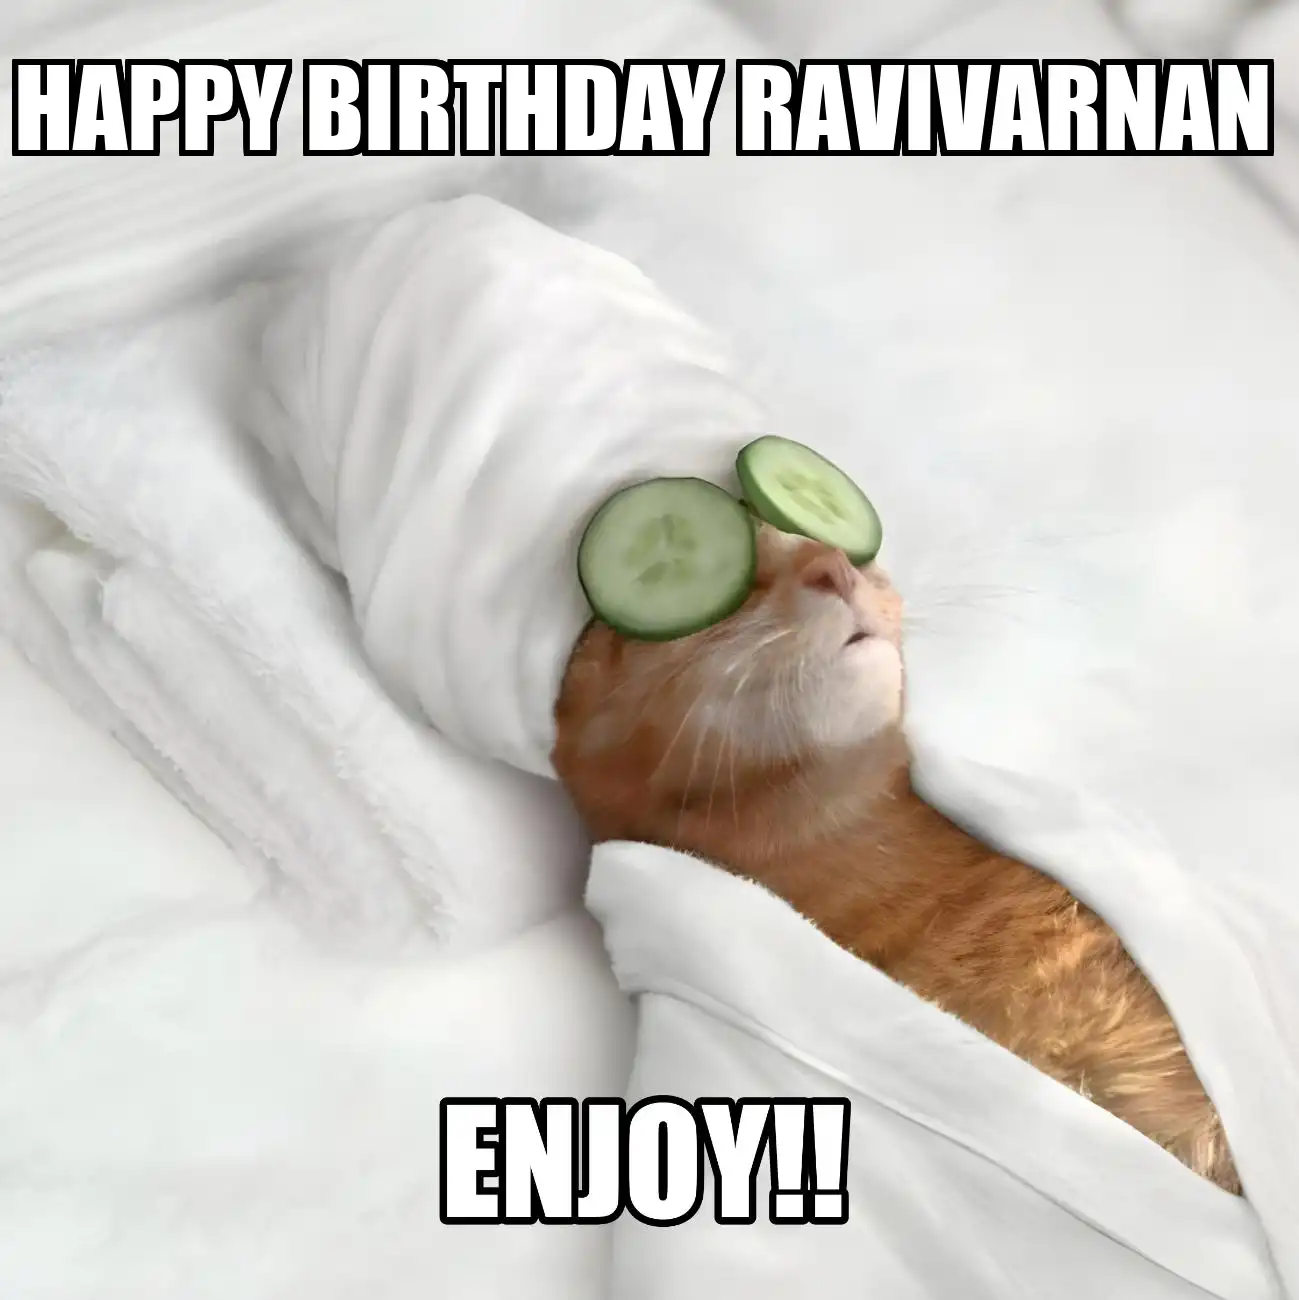 Happy Birthday Ravivarnan Enjoy Cat Meme